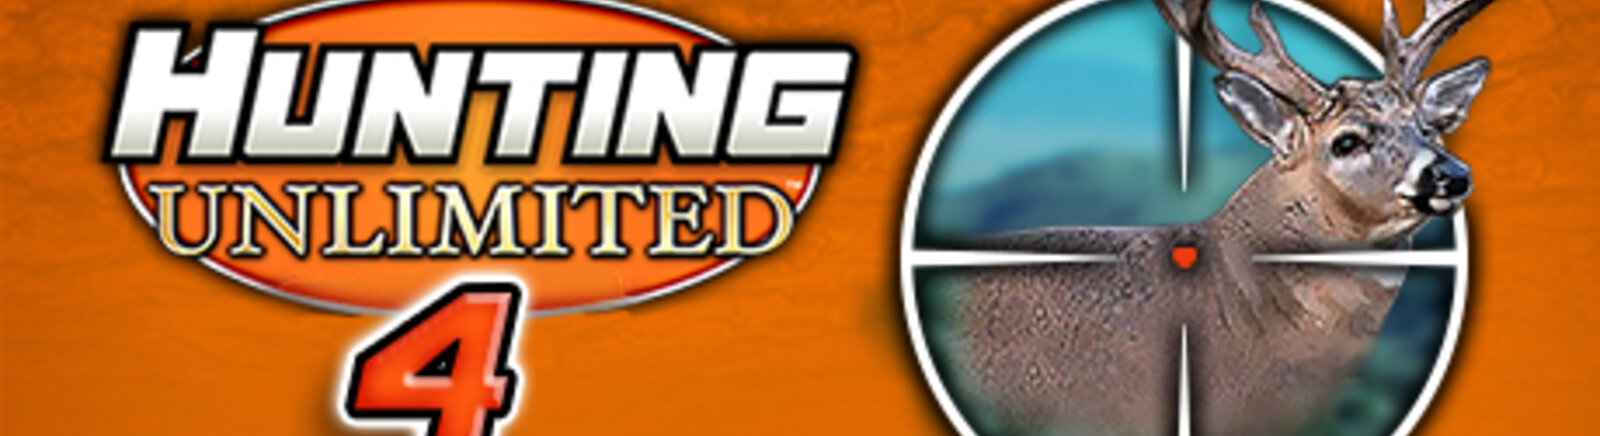 Дата выхода Hunting Unlimited 4  на PC в России и во всем мире